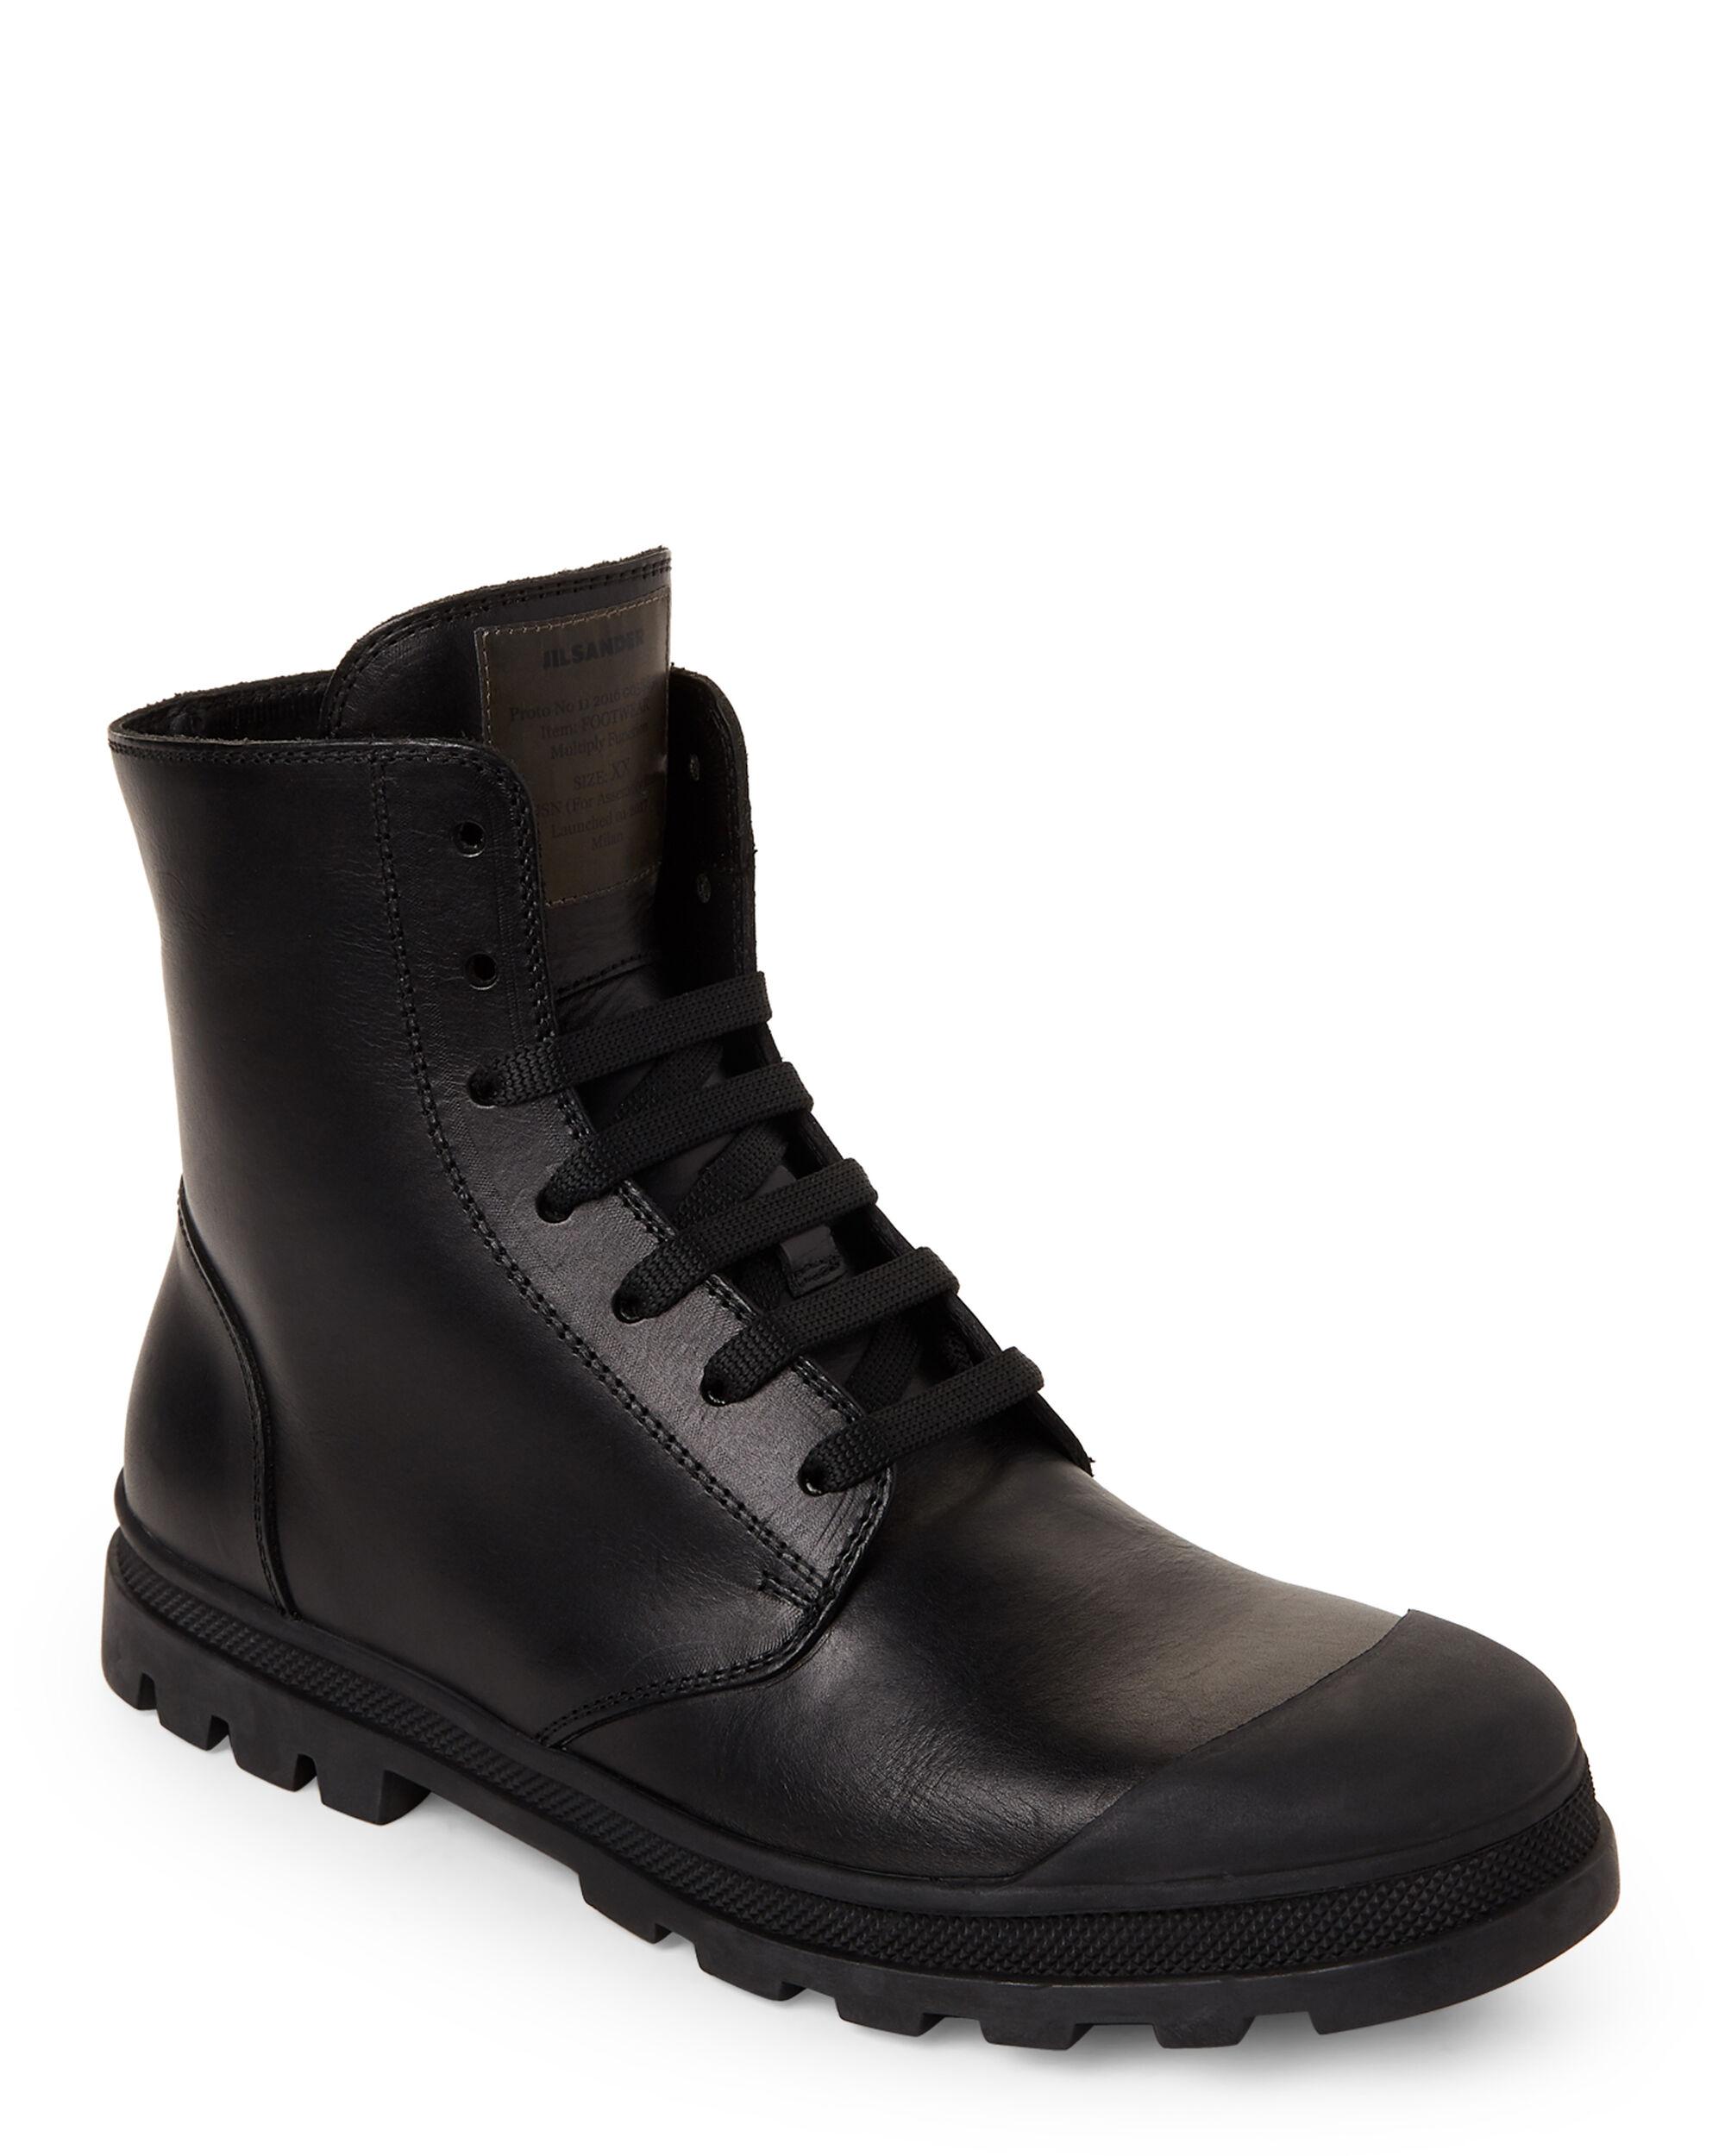 Jil Sander Black Leather Lace-up Boots in Black for Men - Lyst